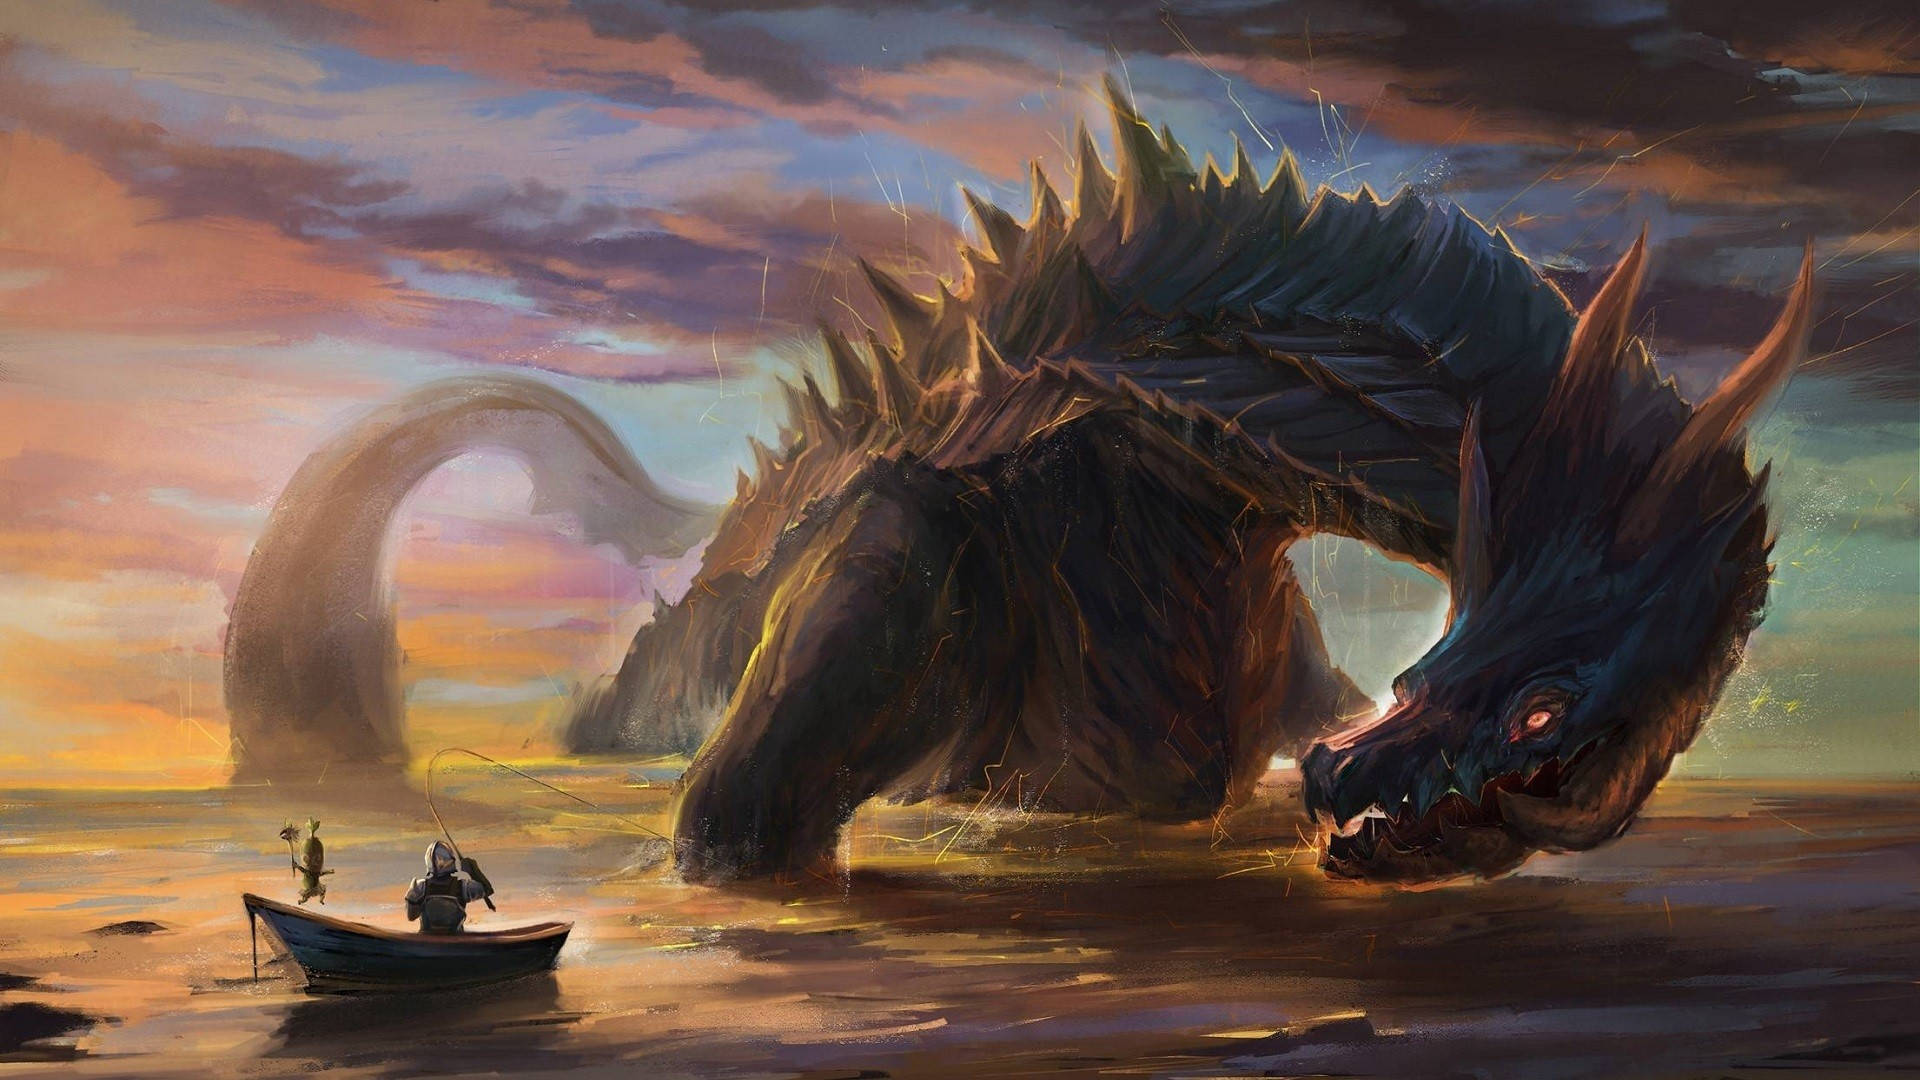 Giant Hd Dragon On Water